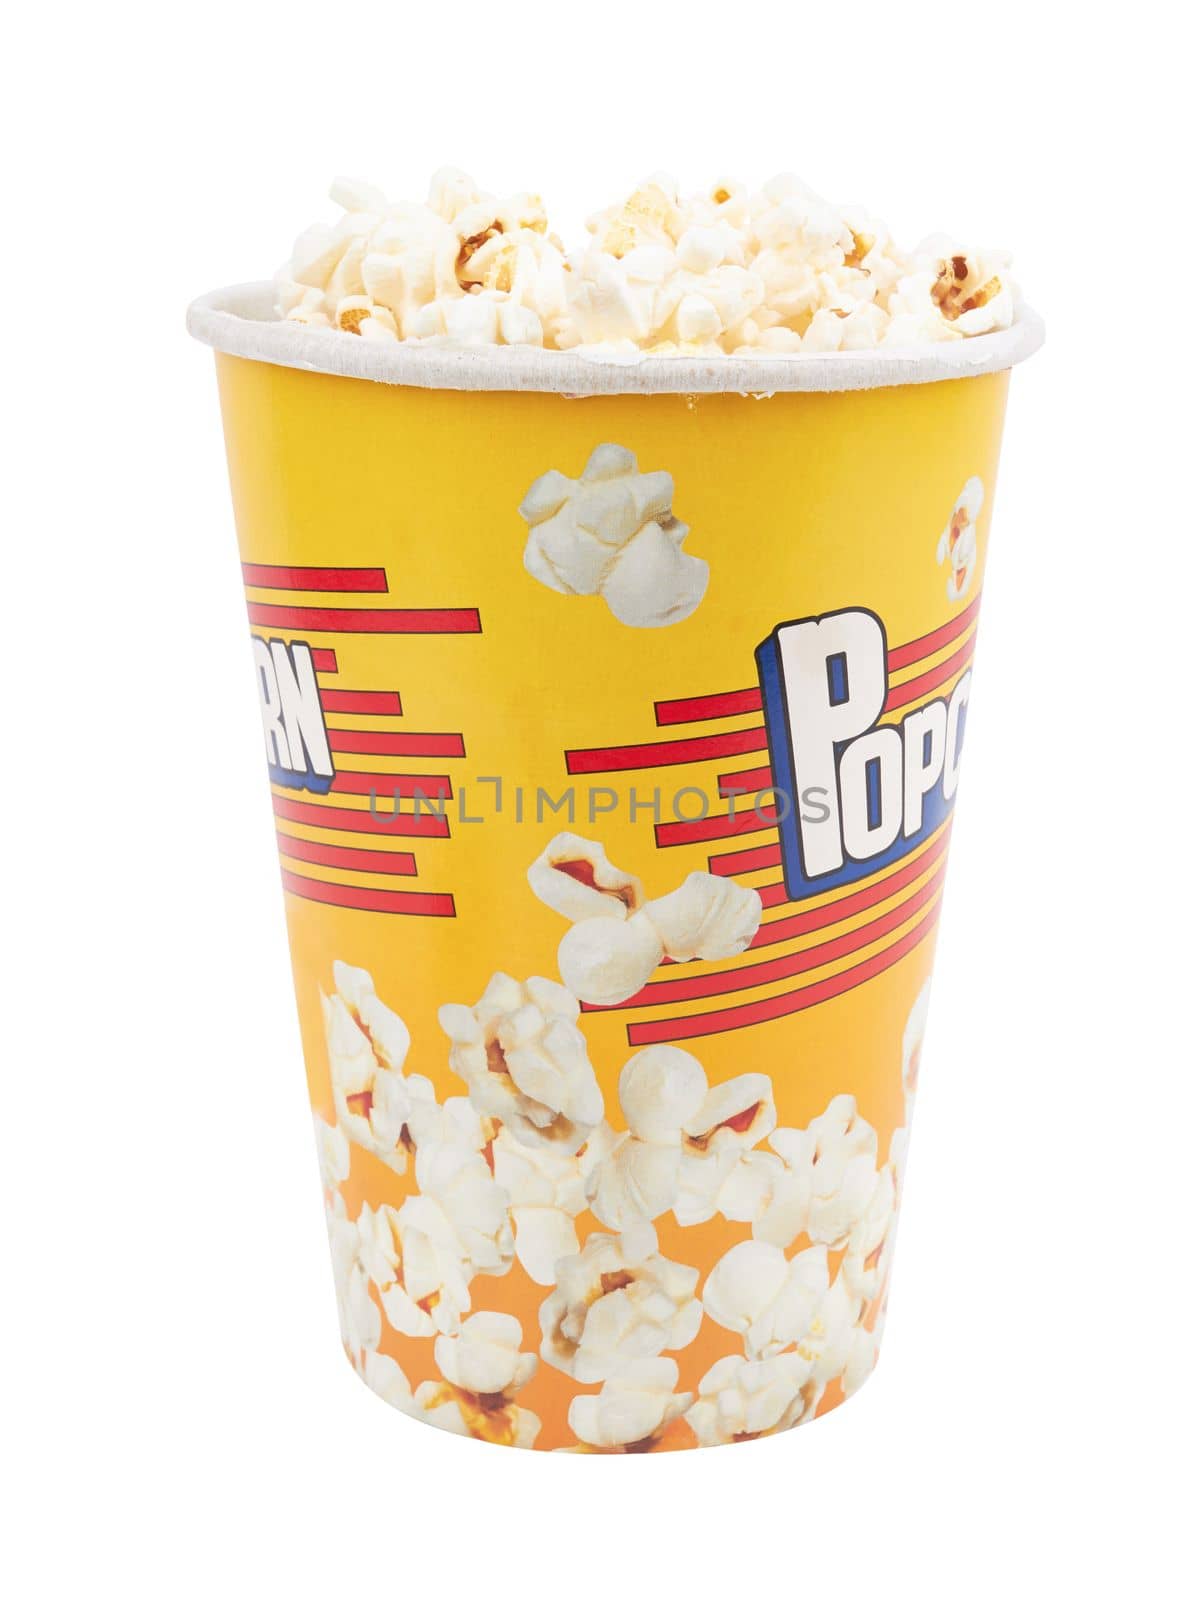 Popcorn in yellow bucket  by pioneer111